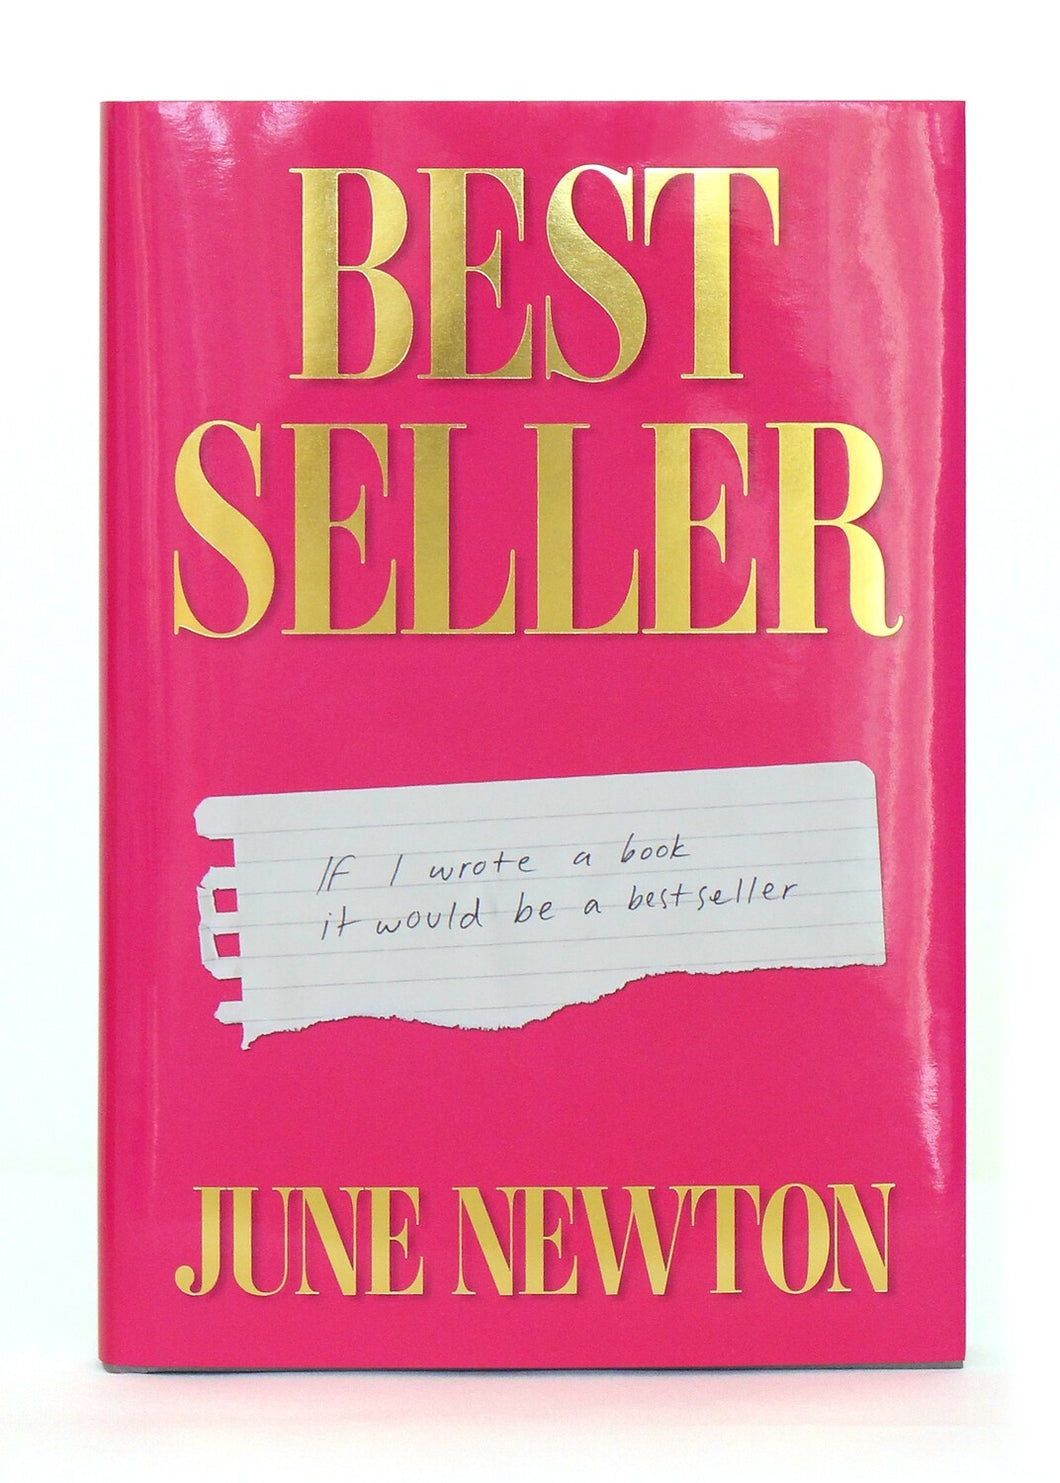 IDEA BEST SELLER June Newton